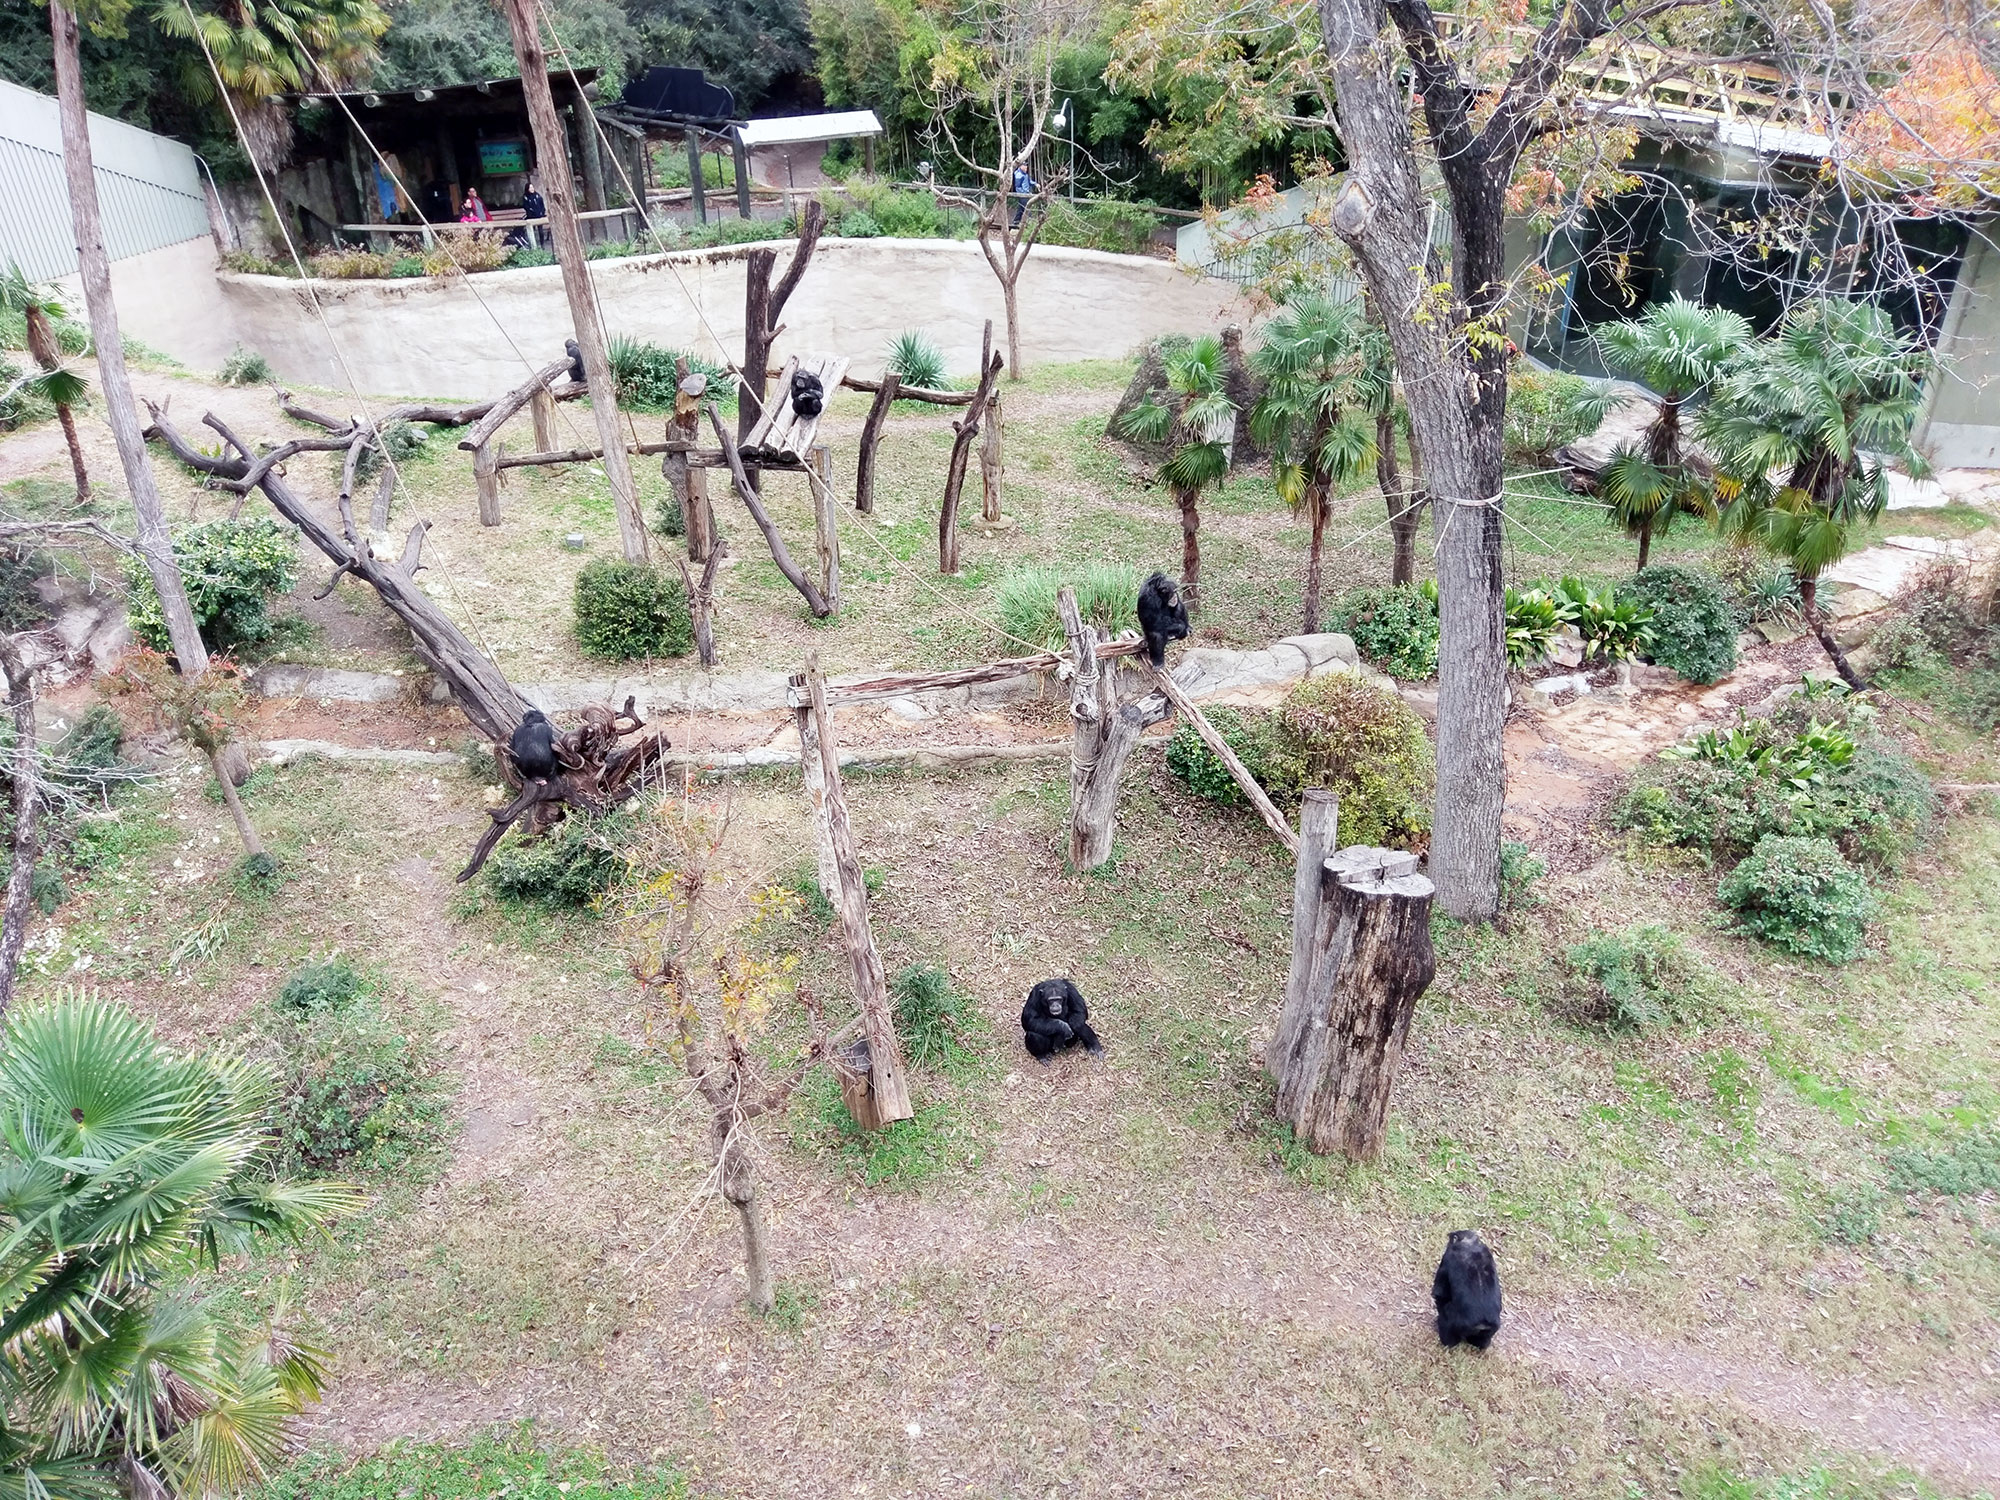 Apes at the Dallas zoo.